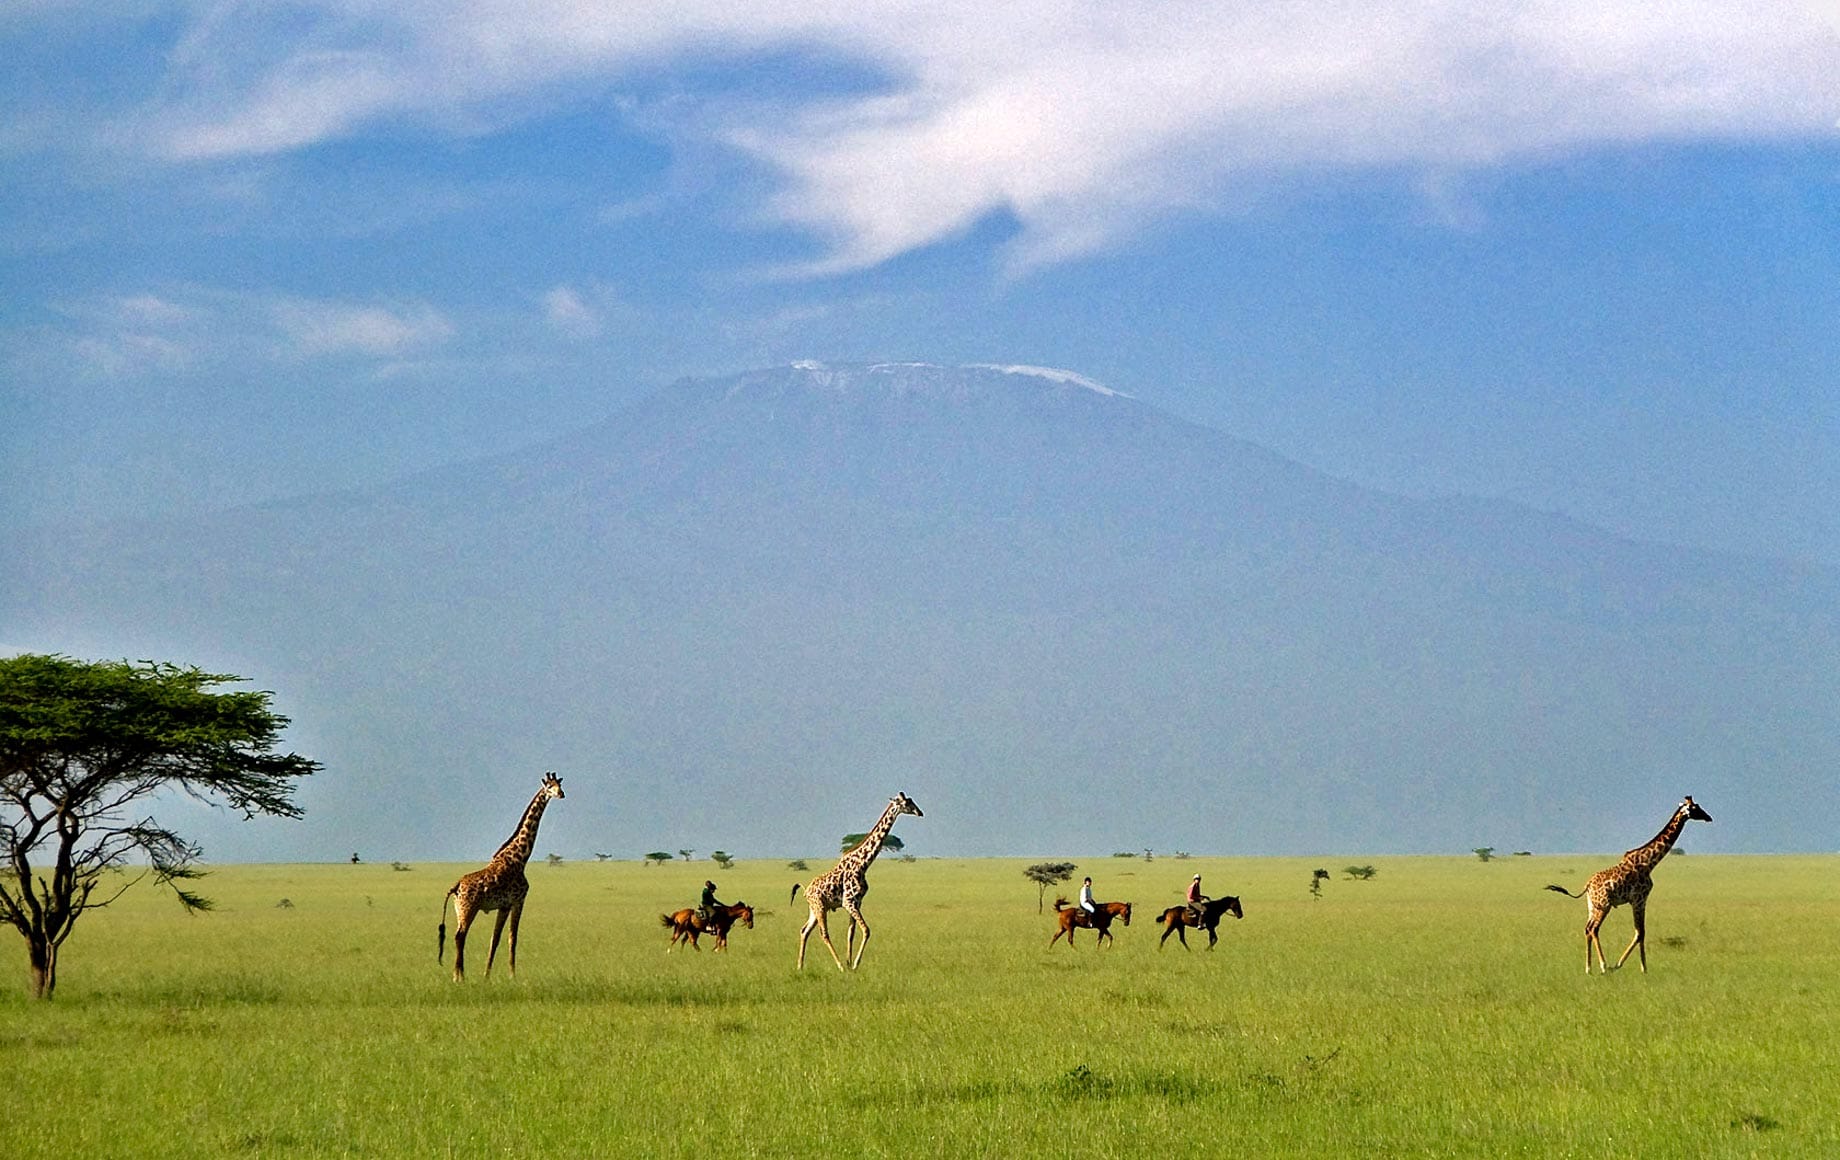 Horseback riding alongside wild giraffes at Chyulu Hills